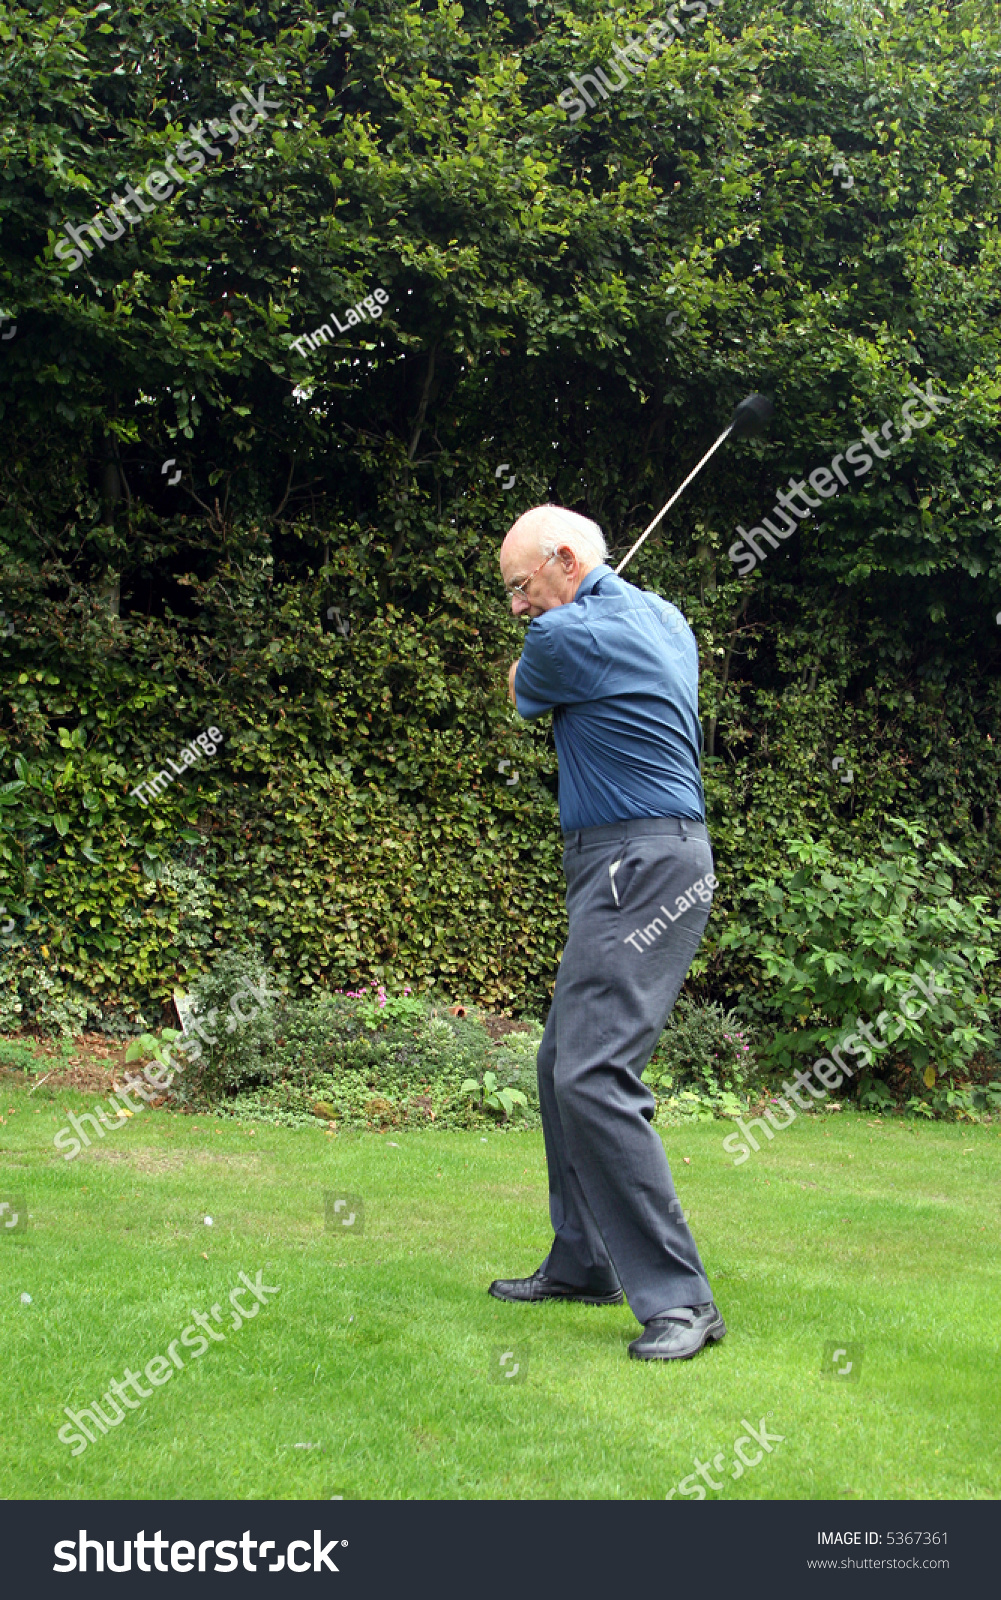 stock-photo-senior-golf-year-old-man-practicing-in-his-backyard-5367361.jpg